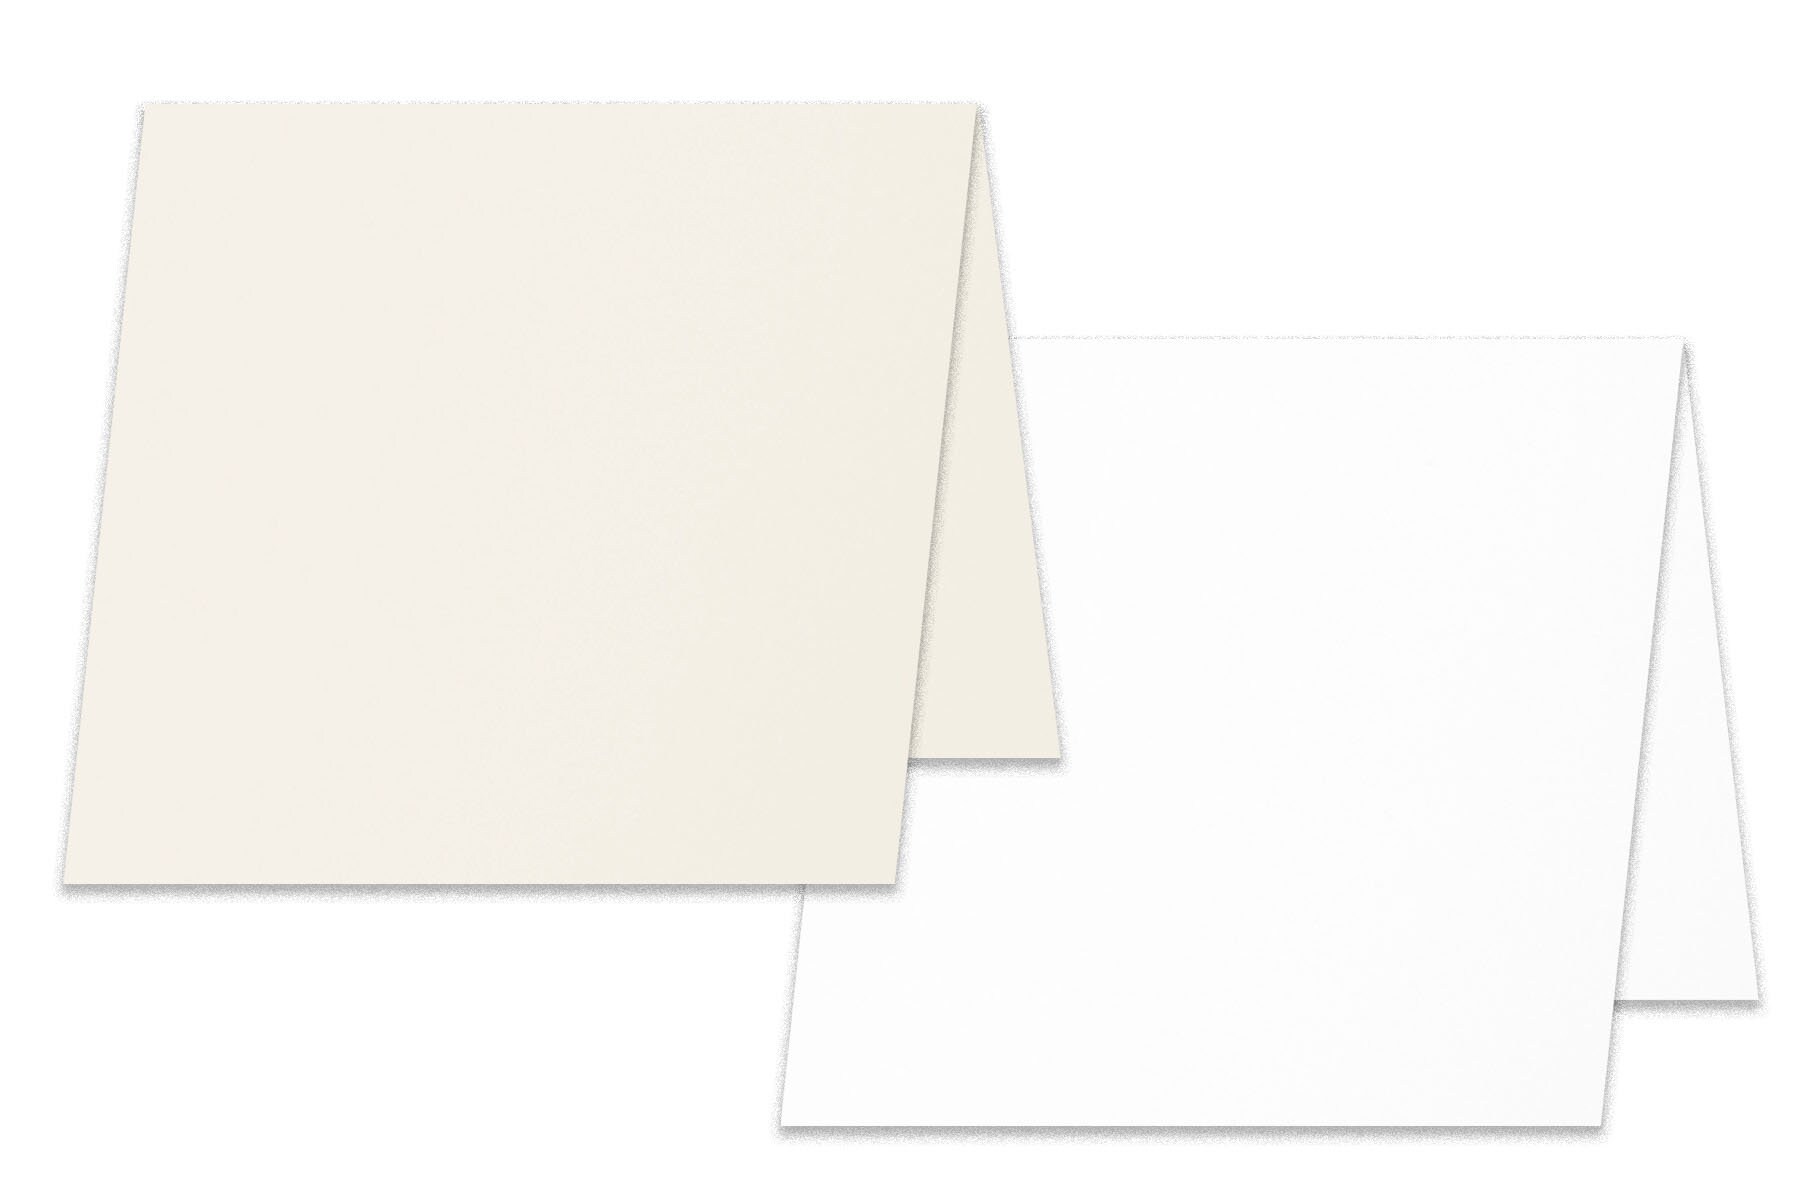 COUGAR Opaque WHITE Heavy 130 lb. cardstock 8.5 x 11- 50 sheets